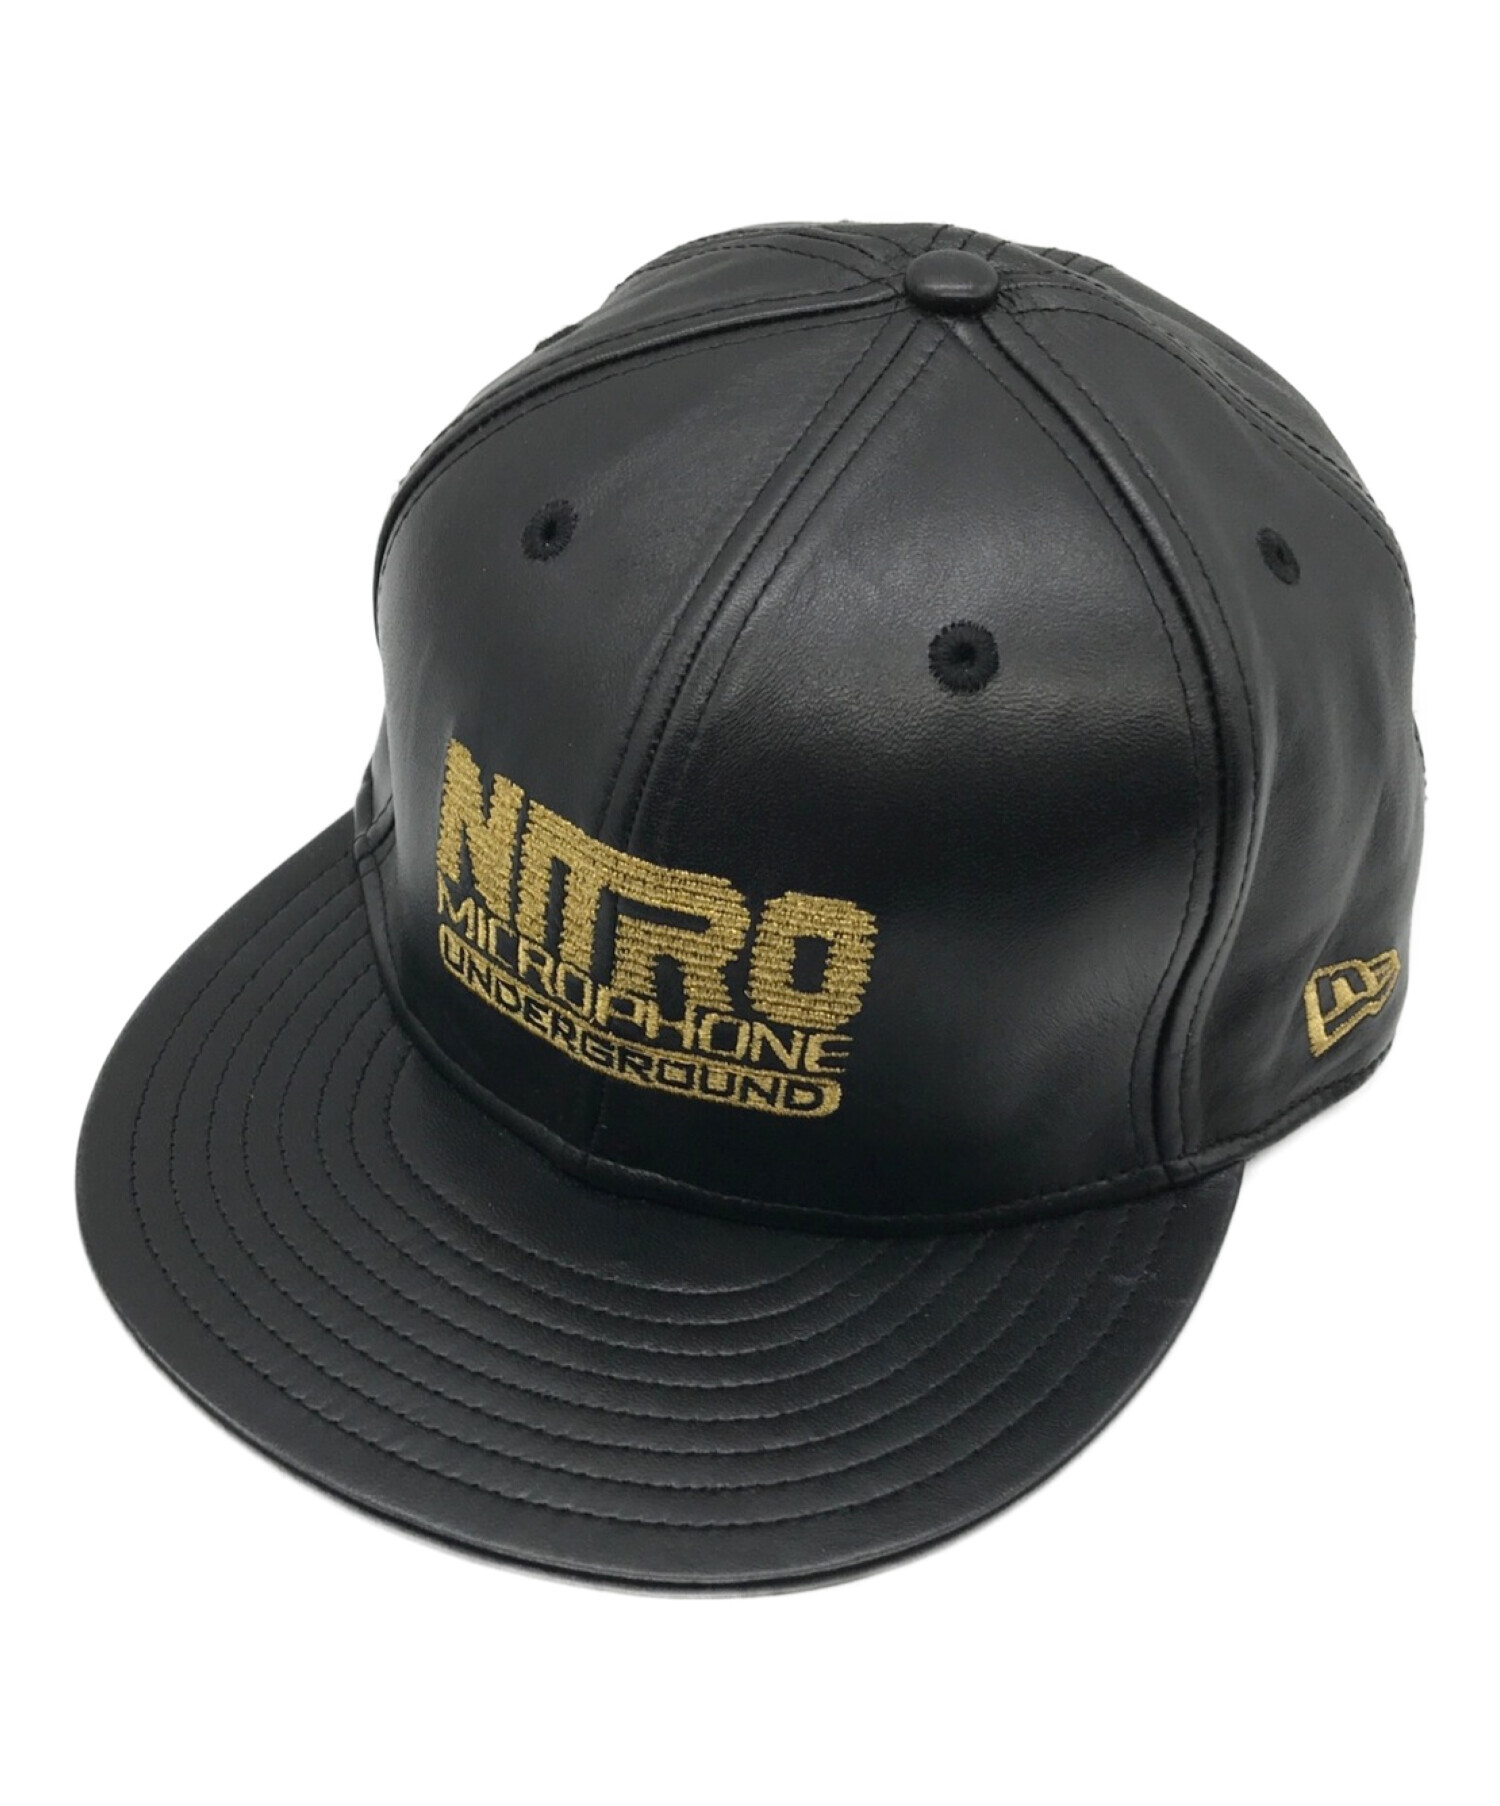 NITRO MICROPHONE UNDERGROUND CAP